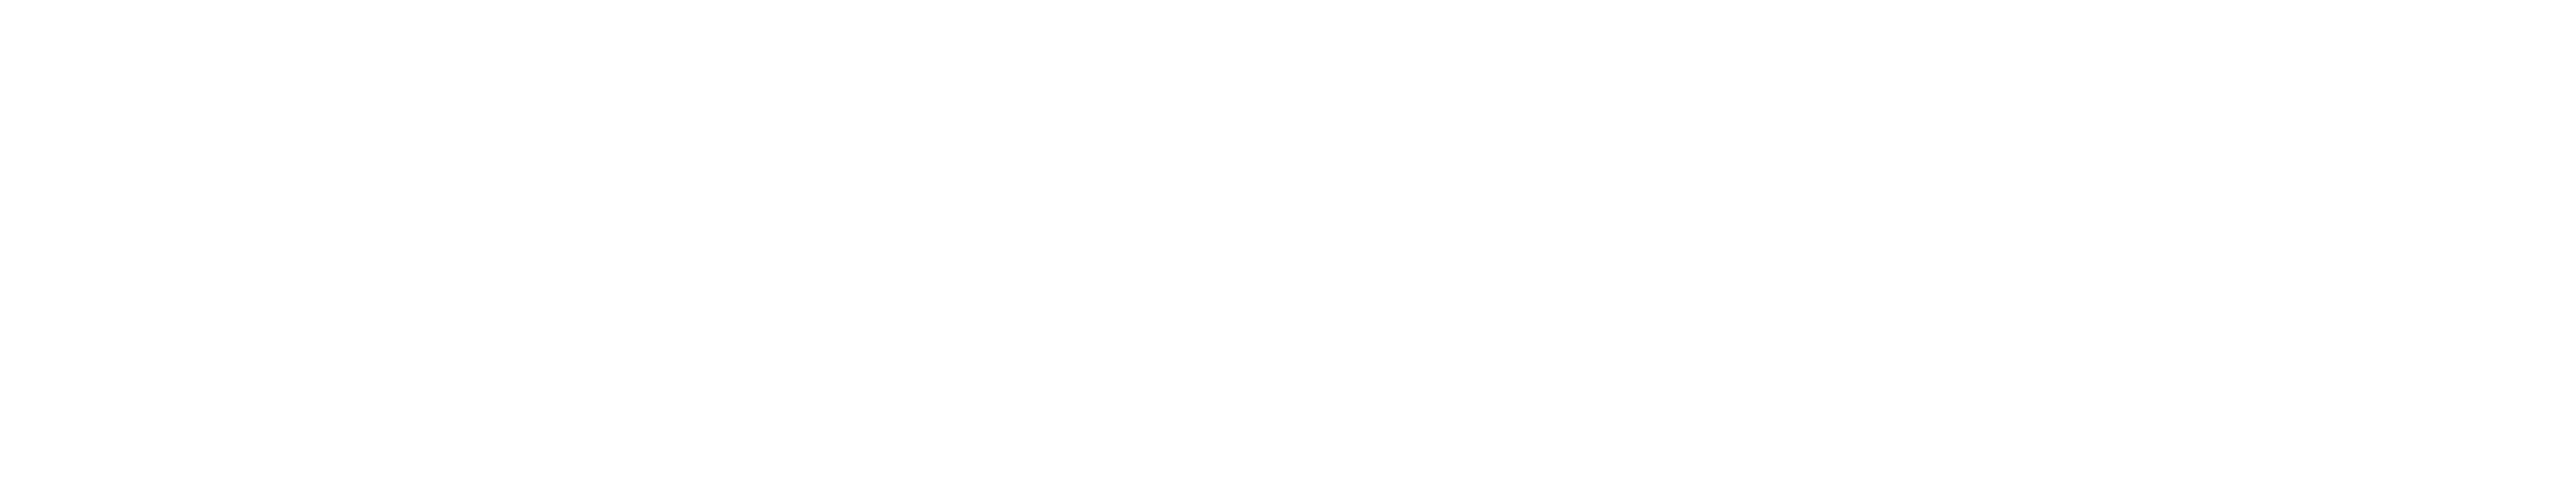 tuum-teater-neg-logo-avalehele-01-01